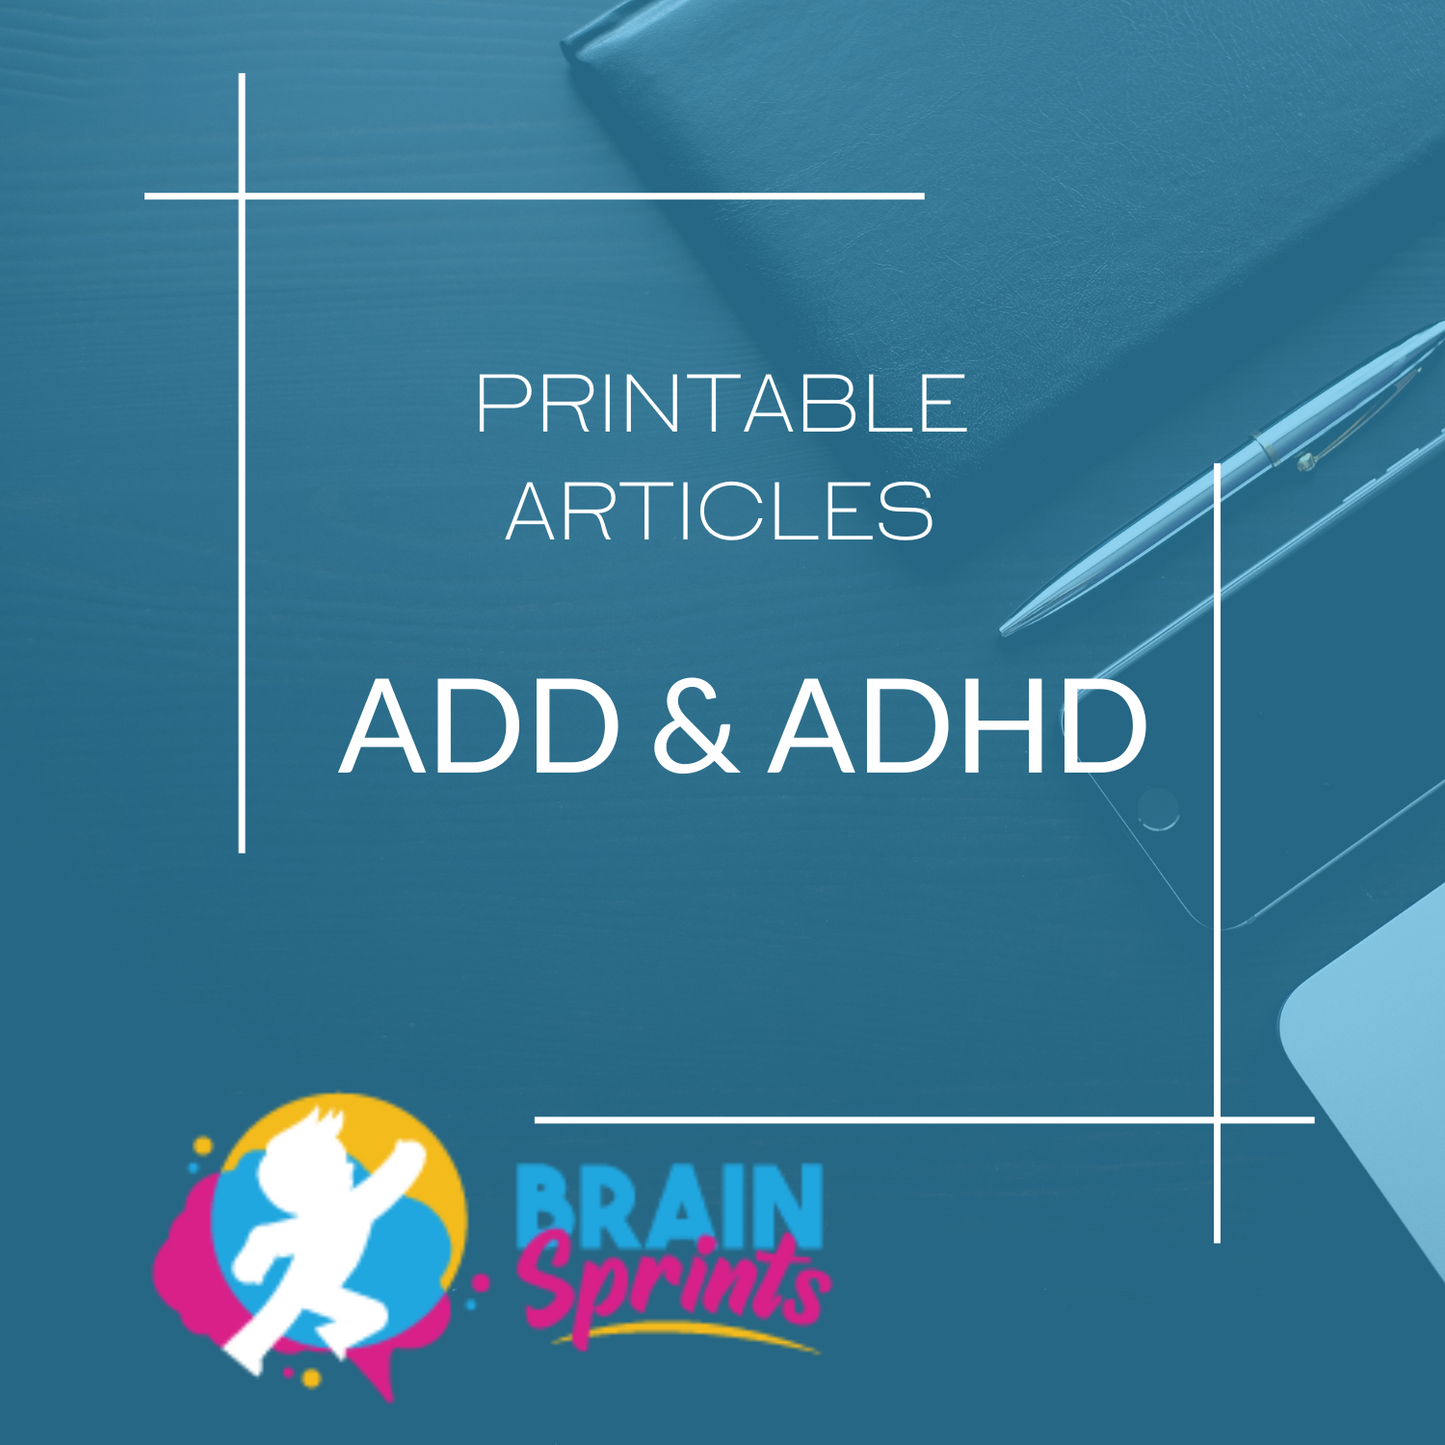 Articles-ADD & ADHD